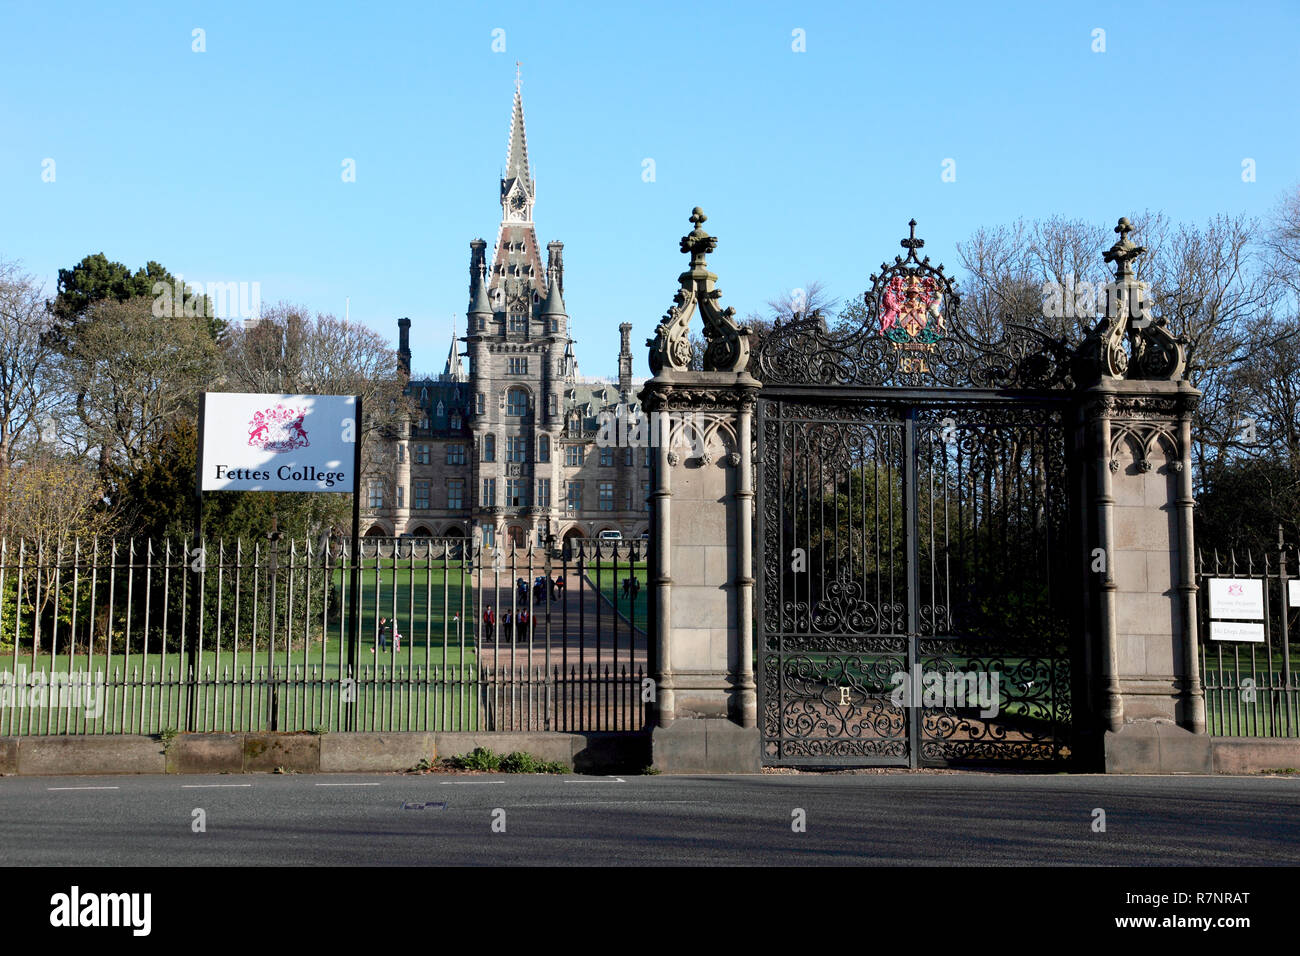 Fettes College, an independent private school in Edinburgh, Scotland Stock Photo